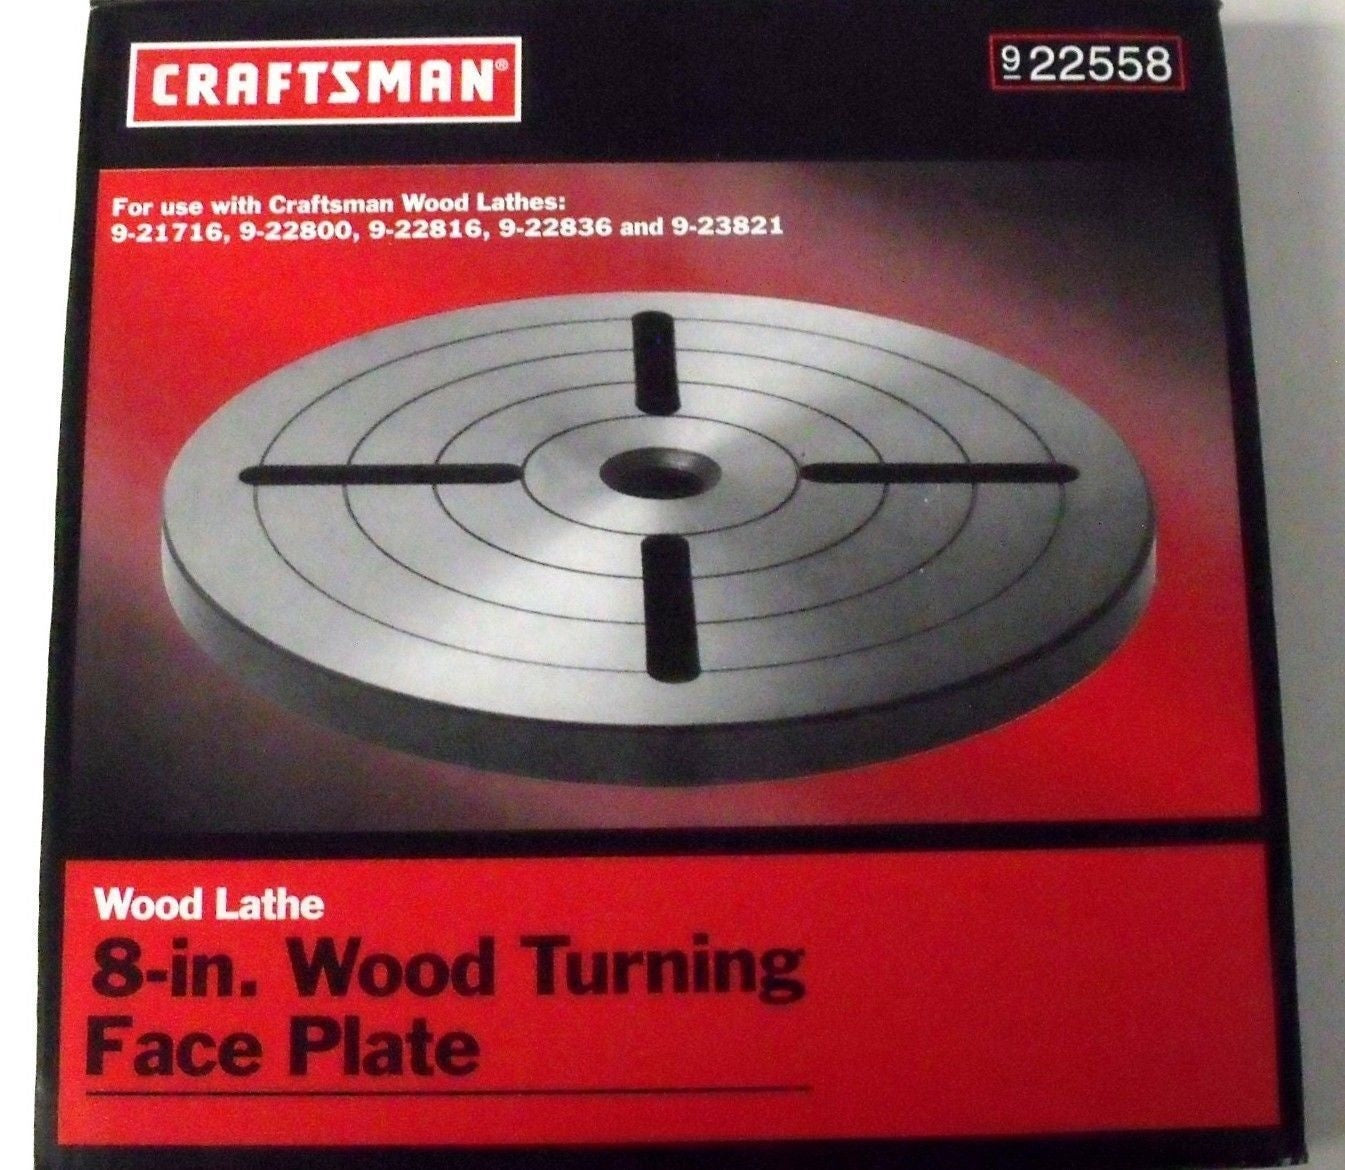 Craftsman 22558 8" Wood Turning Face Plate